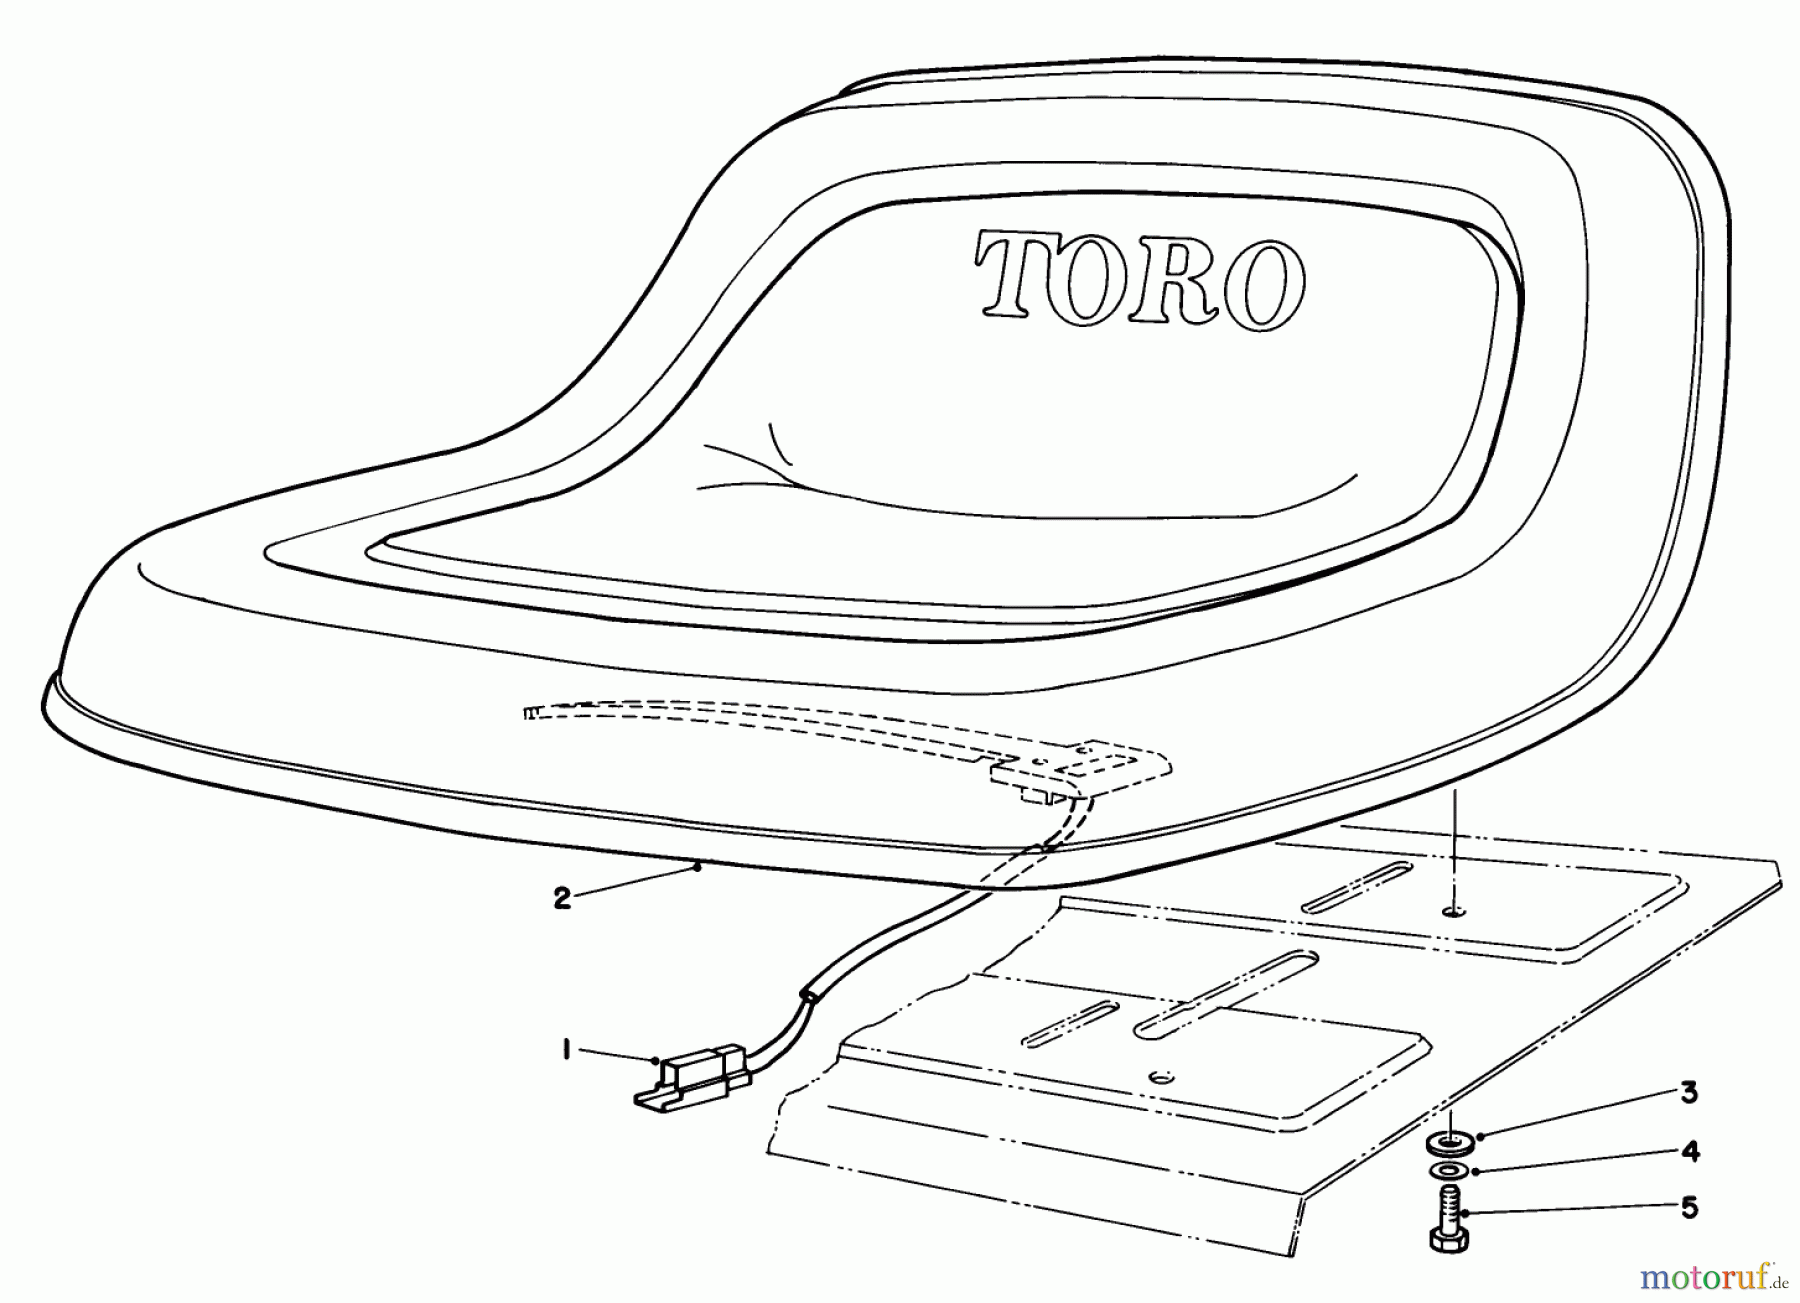  Toro Neu Mowers, Deck Assembly Only 30544 (120) - Toro 44